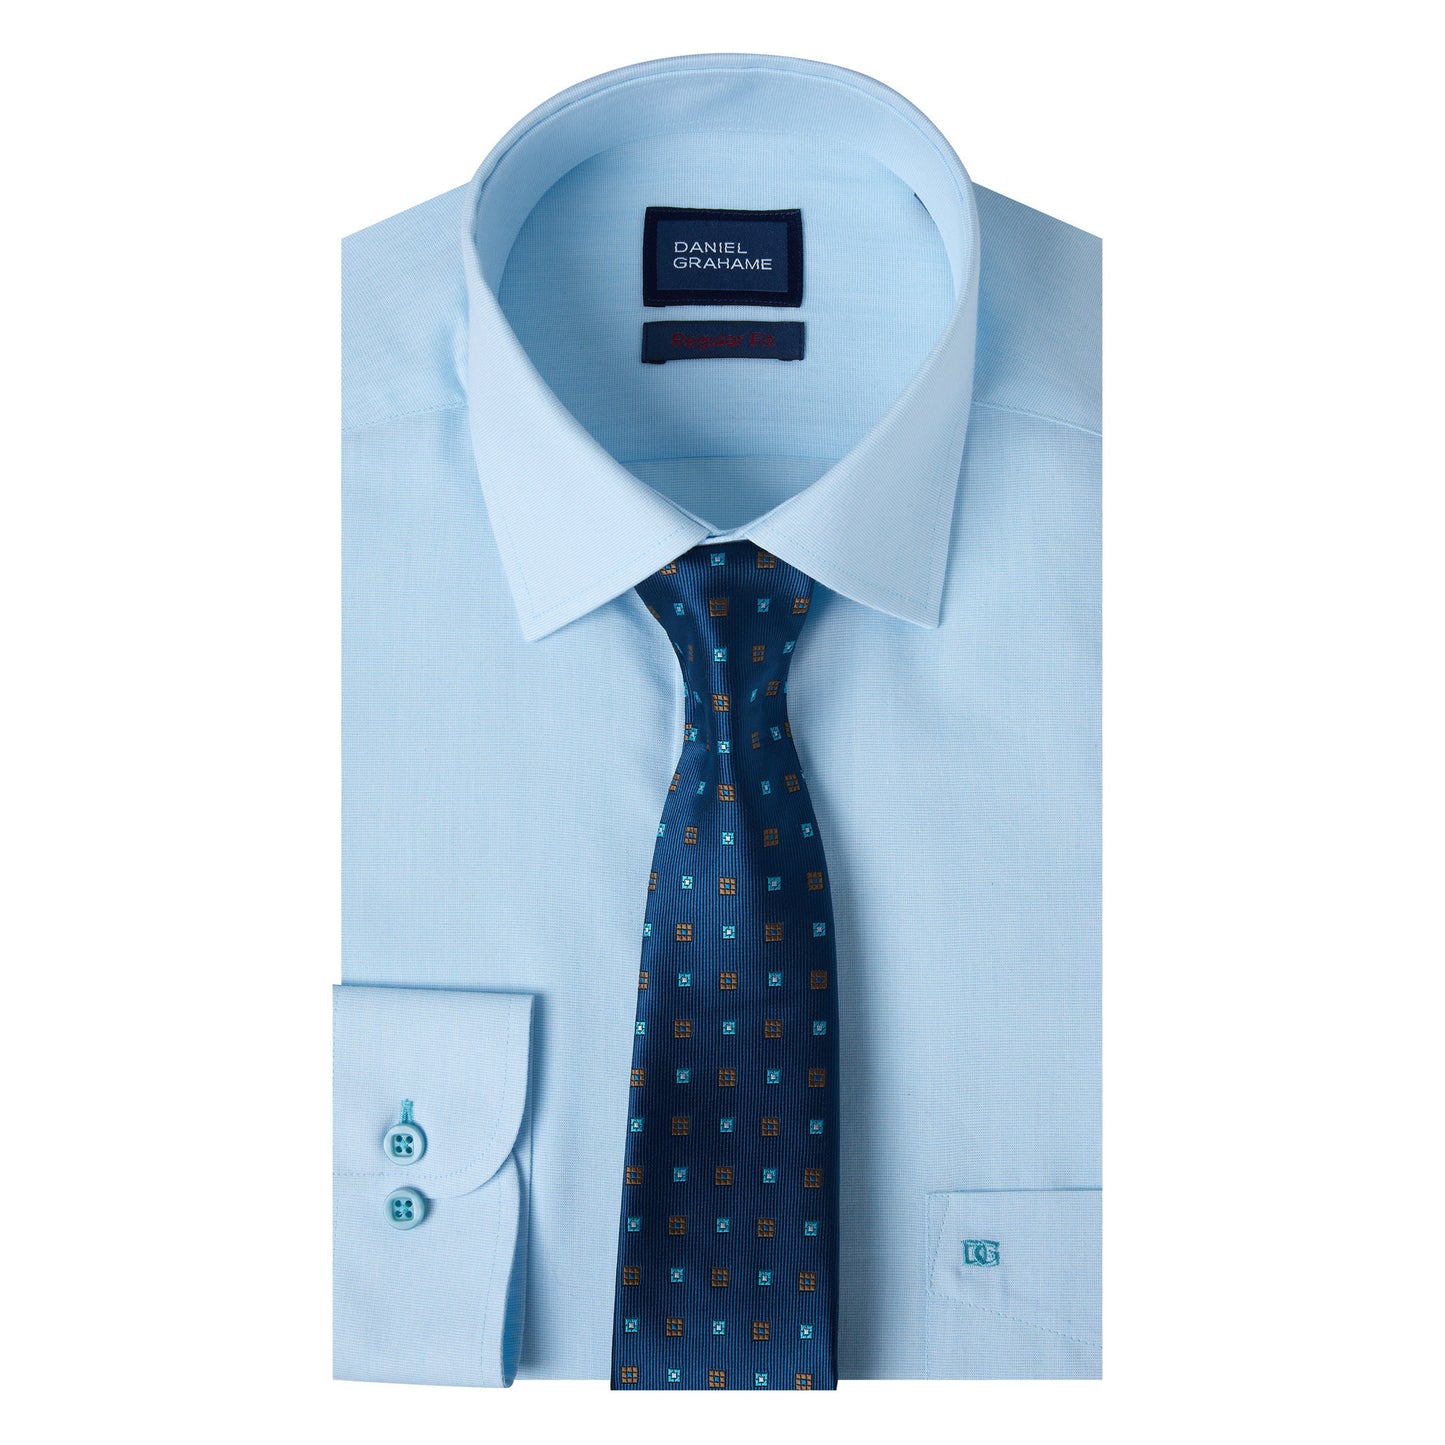 Daniel Grahame 15663T 21 Turquoise Geneva/F Ramsay Long Sleeve Dress Shirt